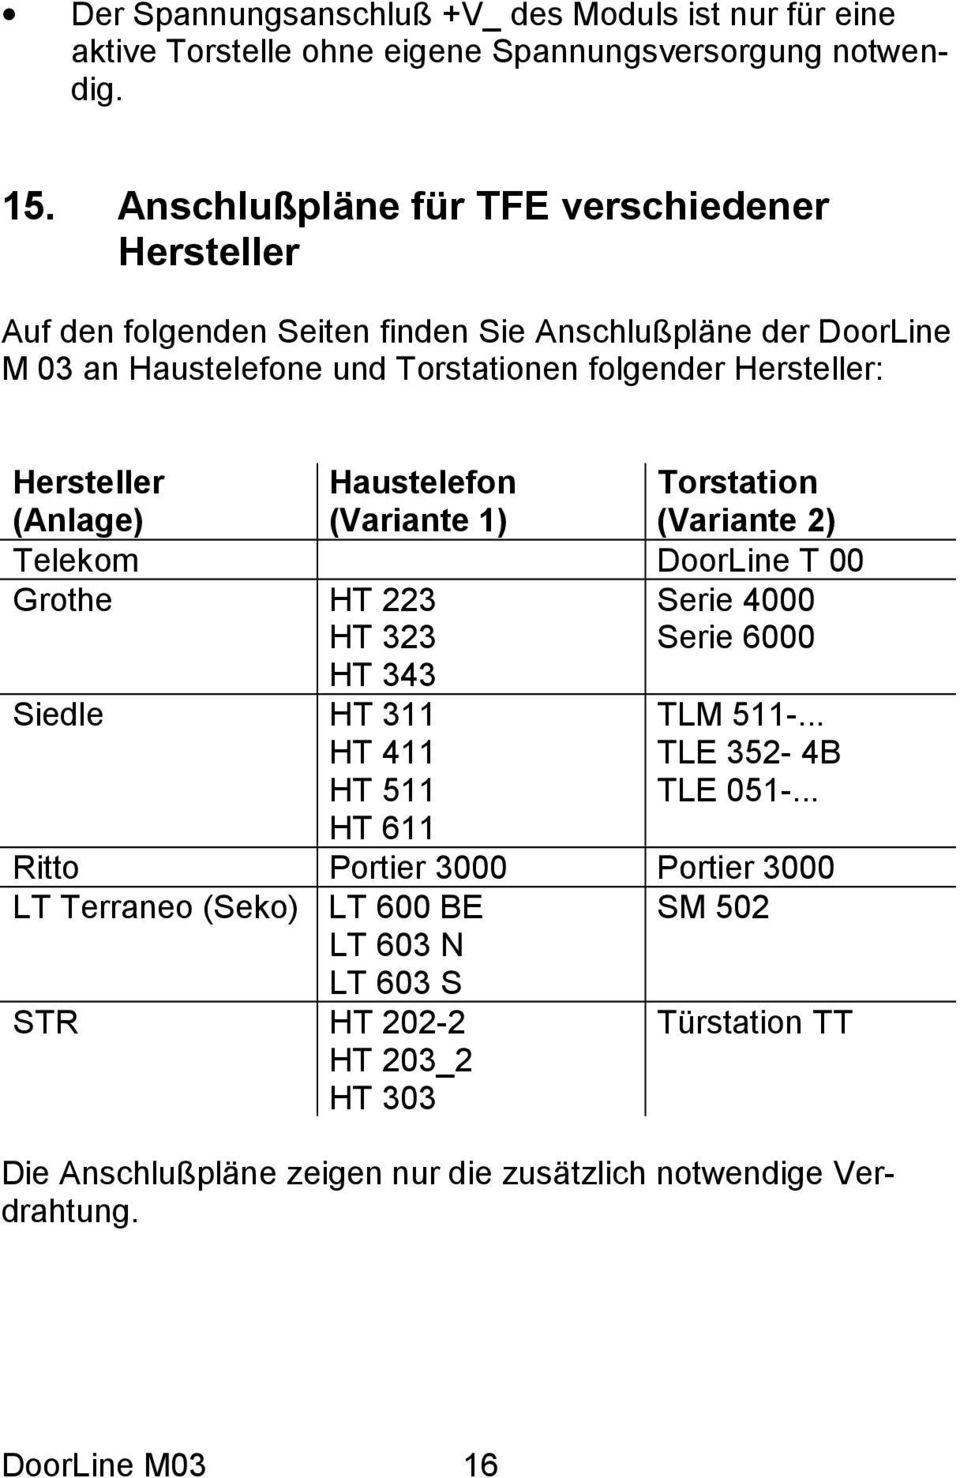 Hersteller (Anlage) Haustelefon (Variante 1) Torstation (Variante 2) Telekom DoorLine T 00 Grothe HT 223 HT 323 HT 343 Serie 4000 Serie 6000 Siedle HT 311 HT 411 HT 511 HT 611